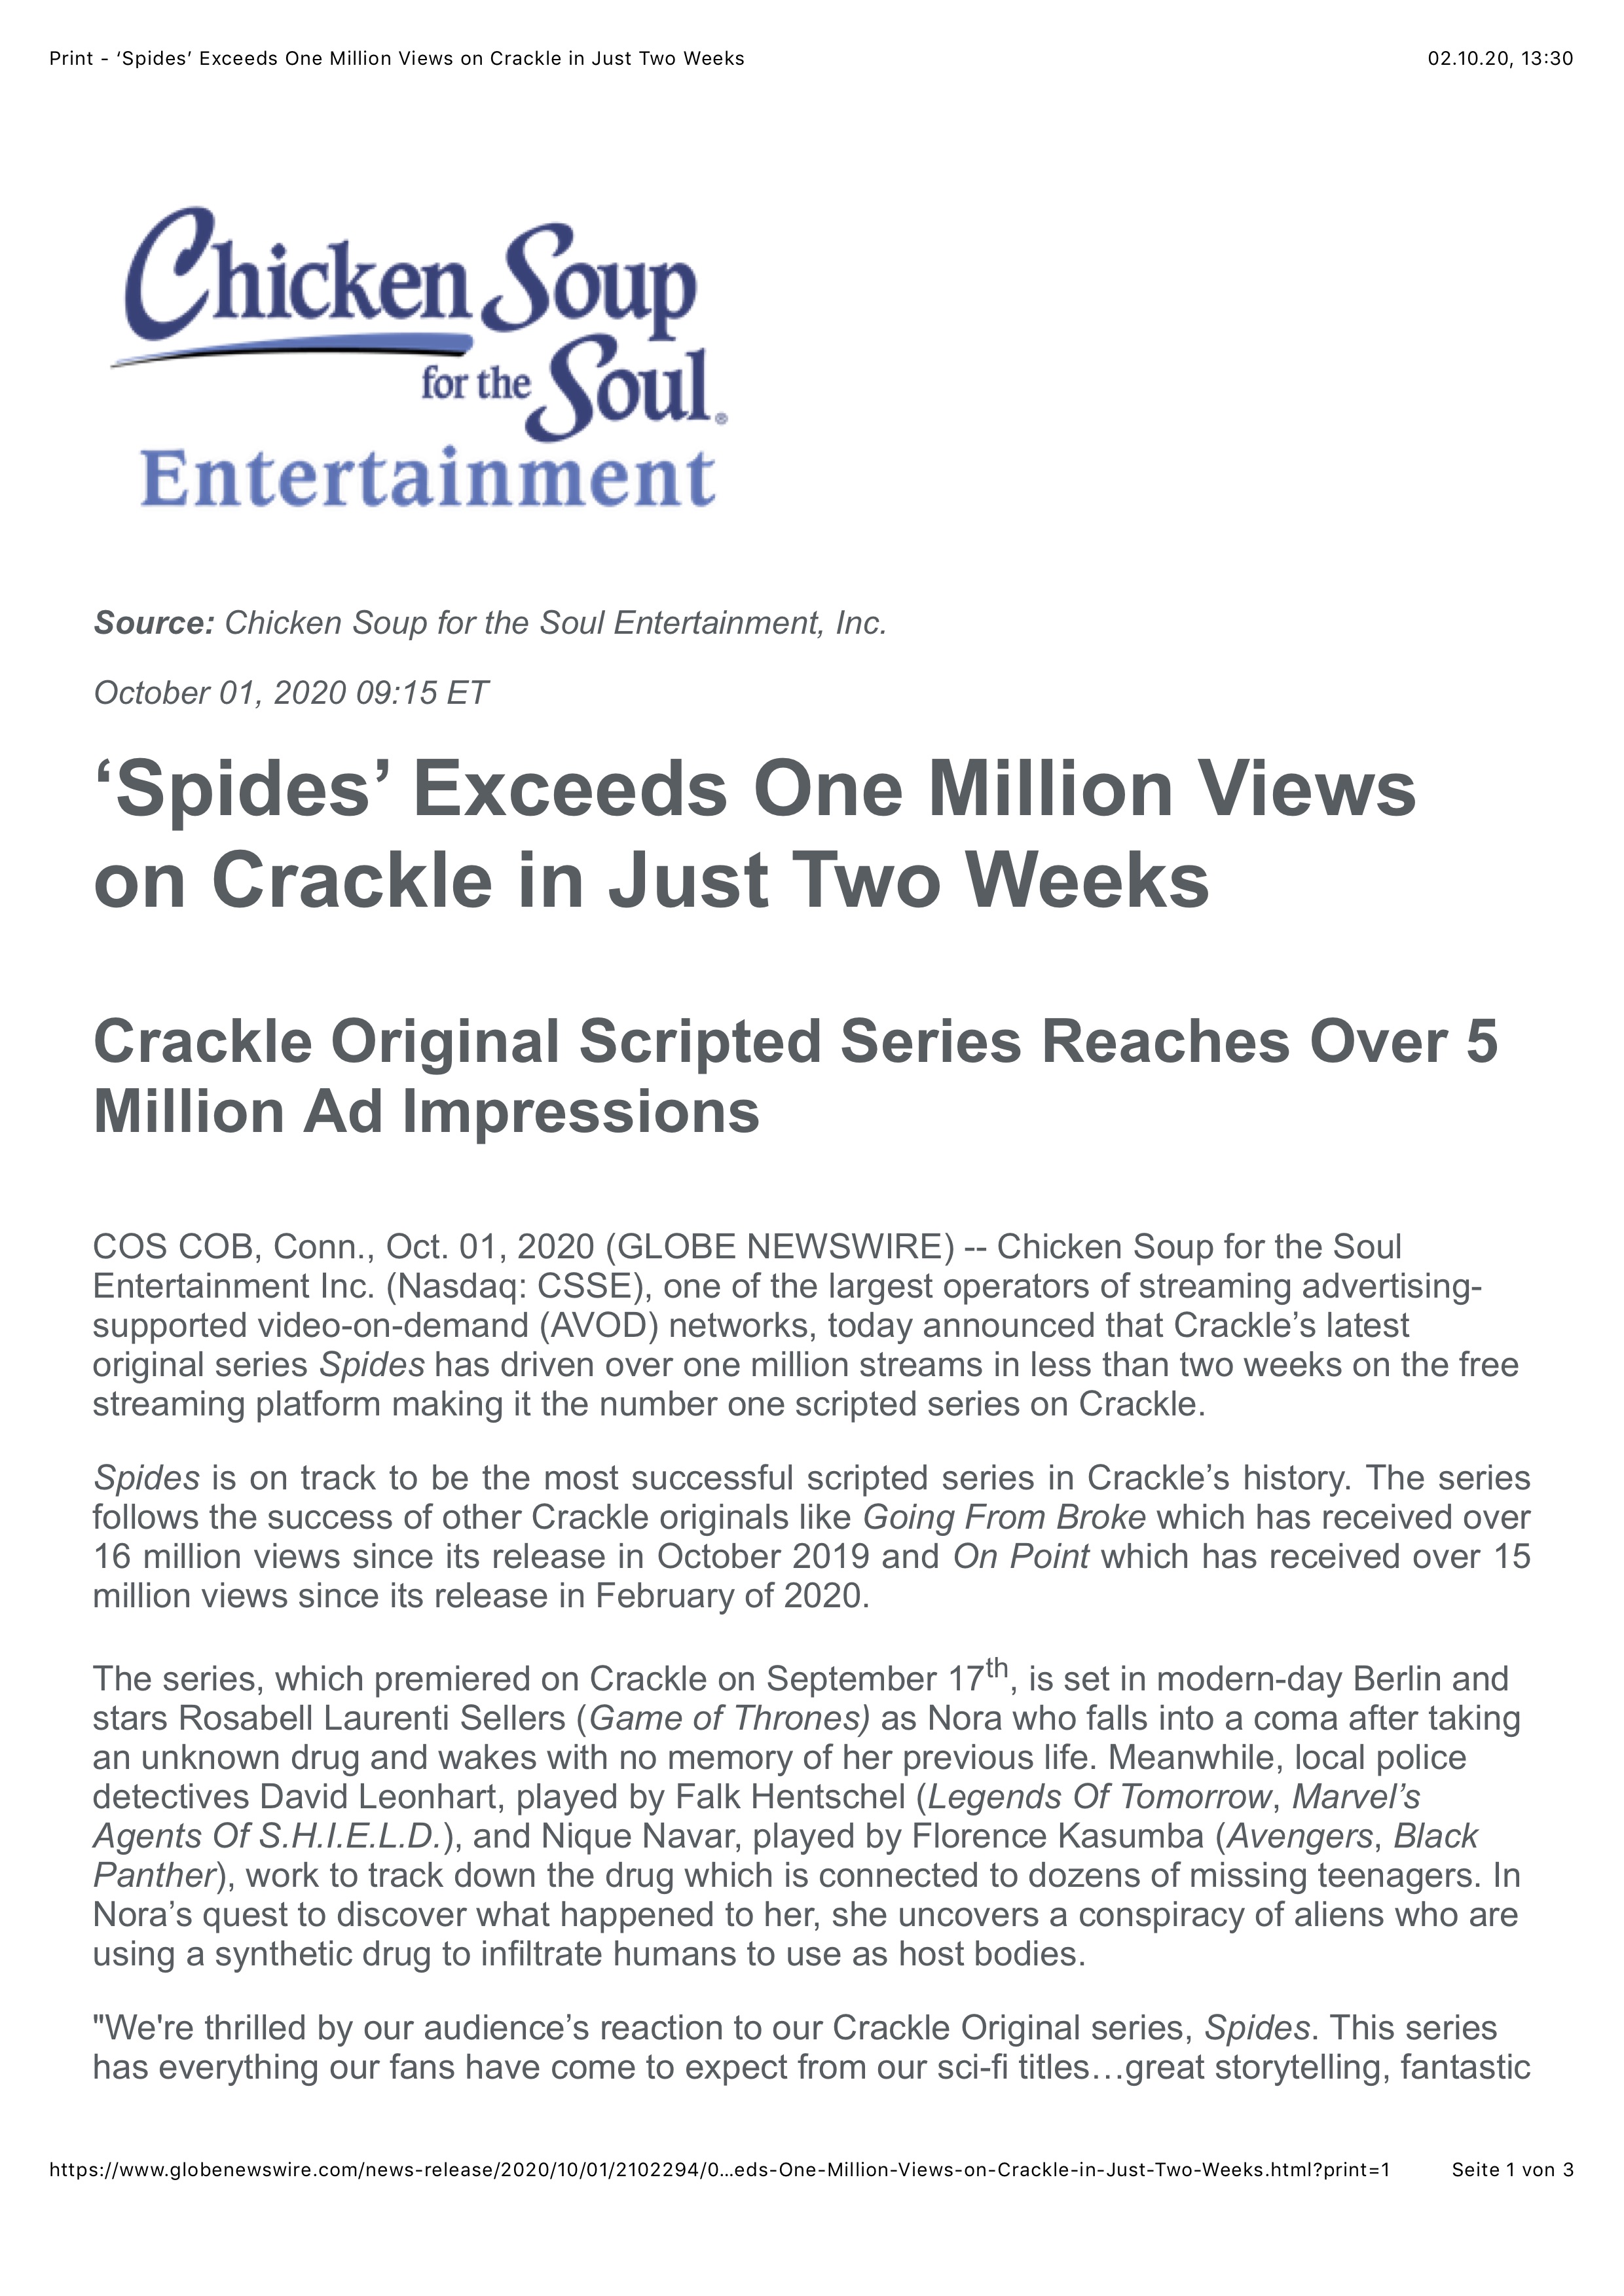 1 Spides Exceeds One Million Views on Crackle in Just Two Weeks Kopie